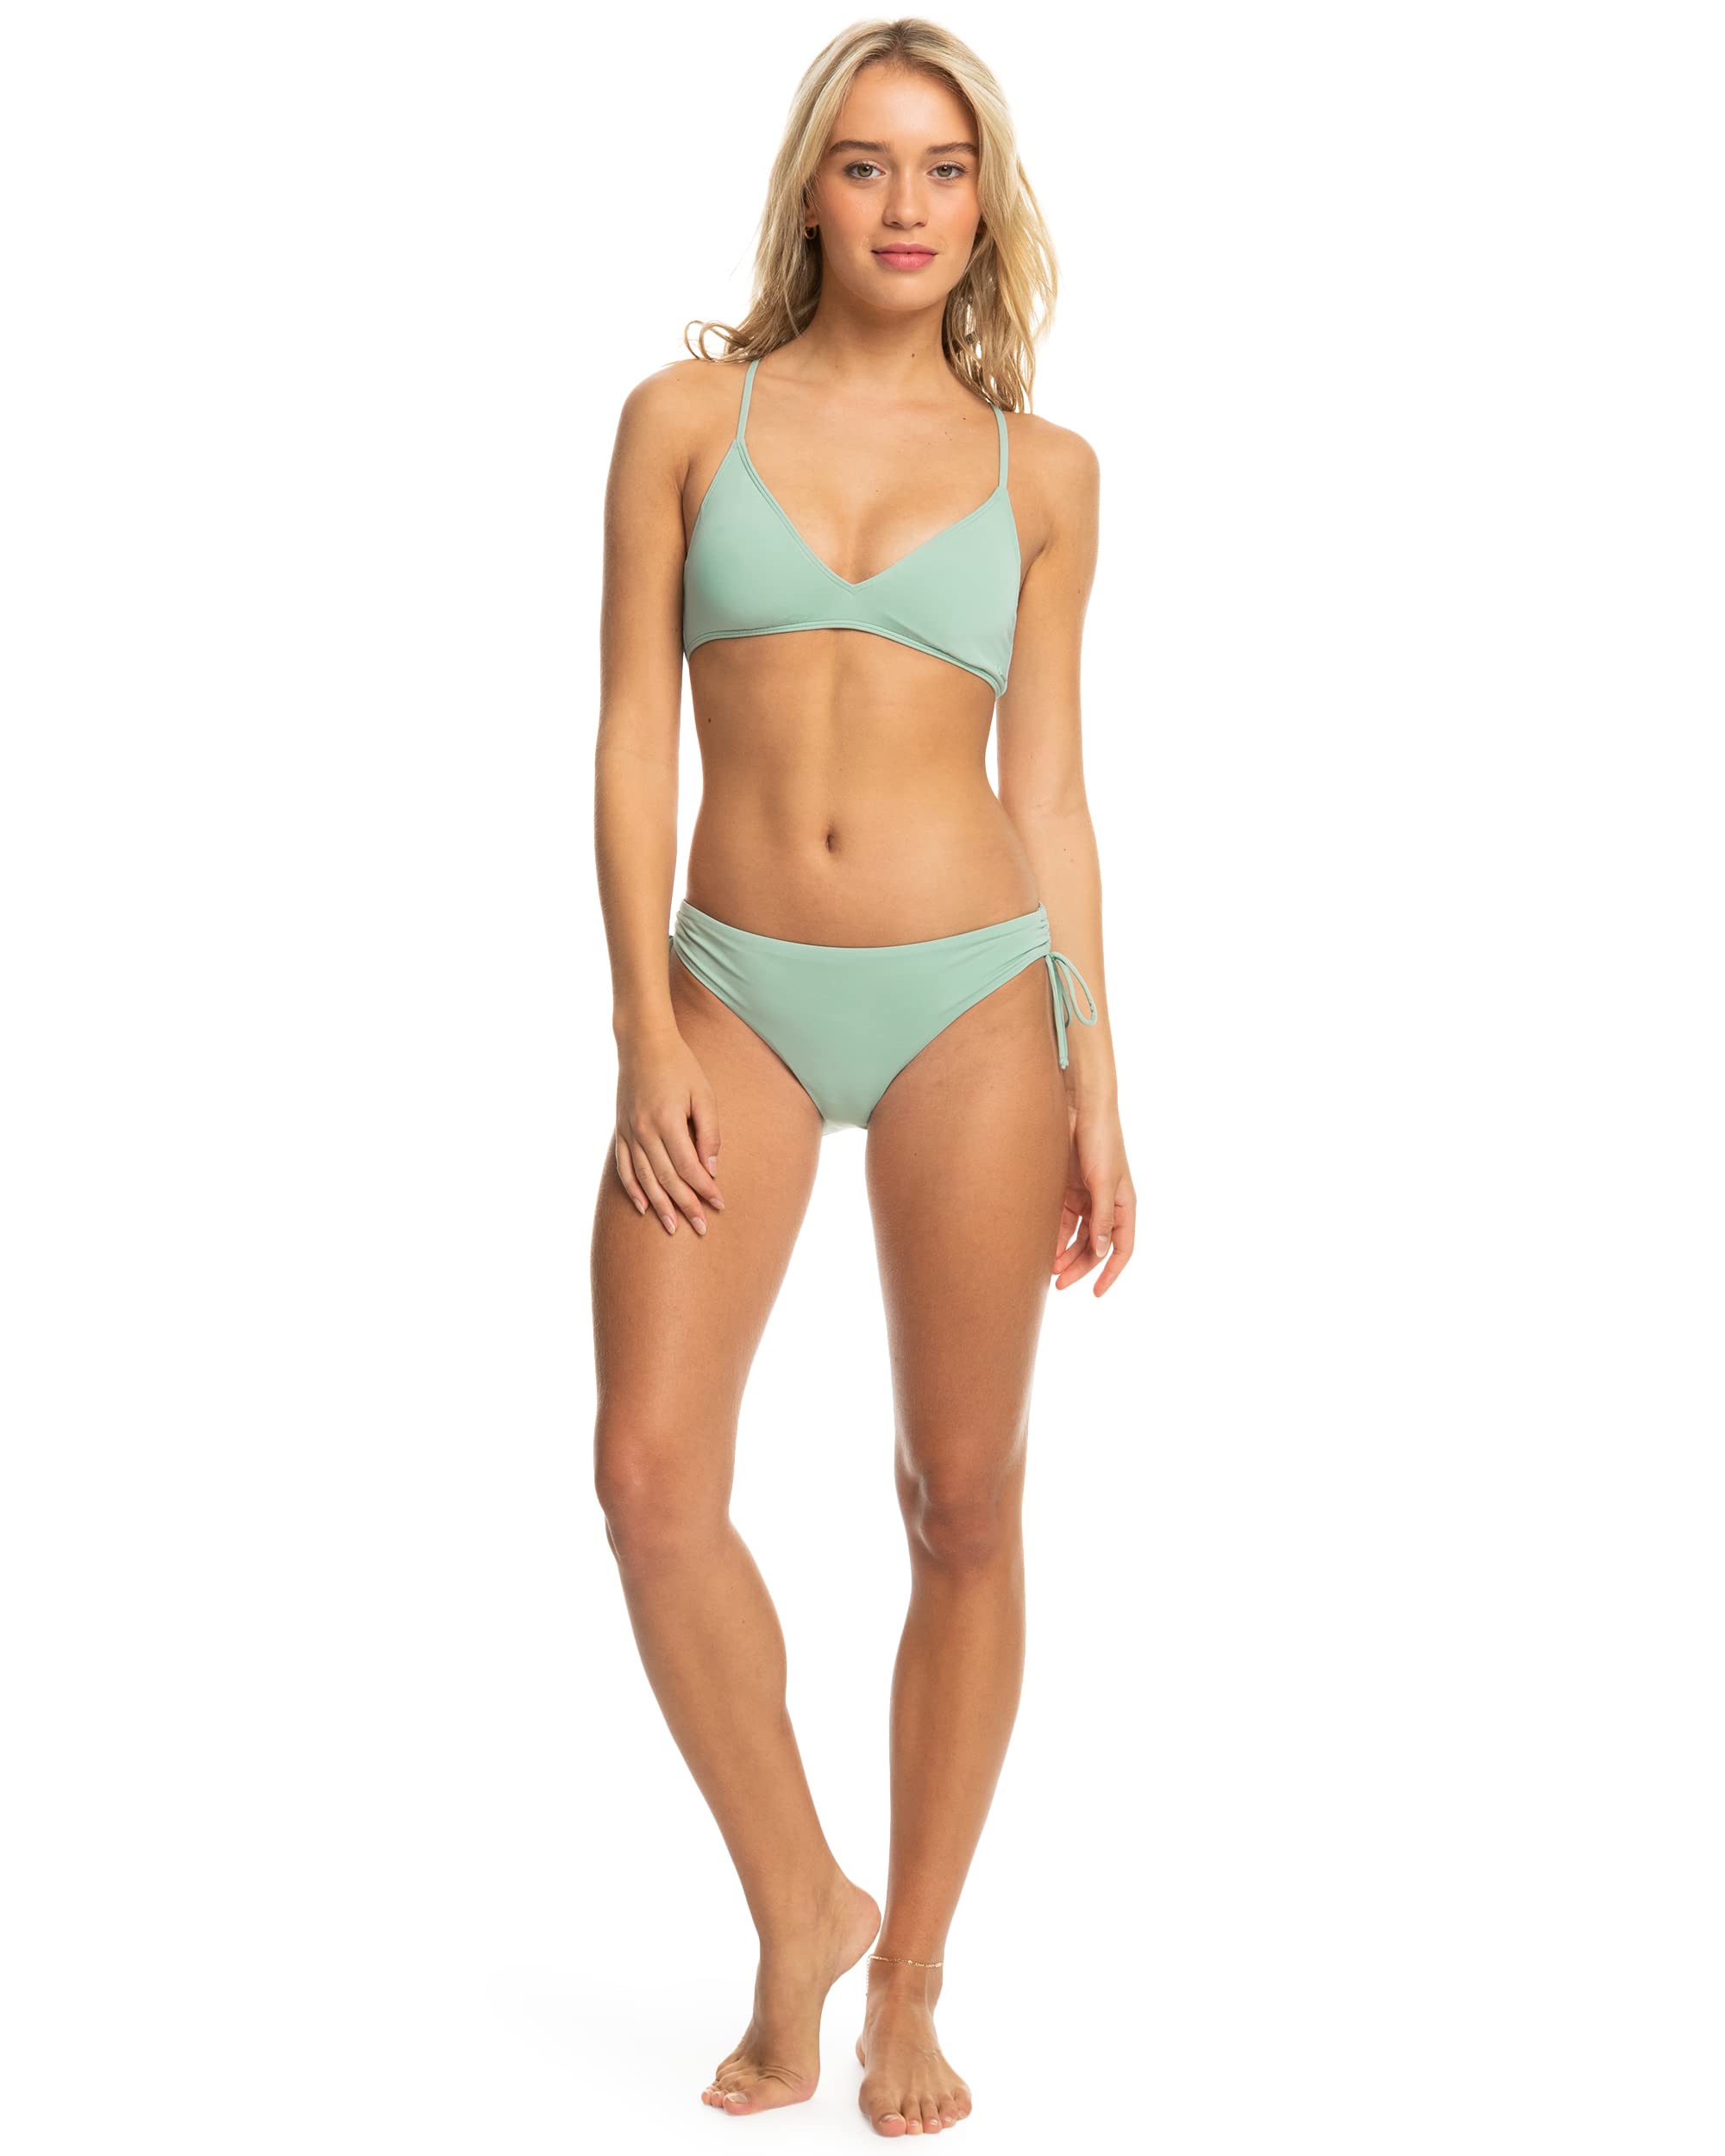 Roxy Women's Standard Beach Classics Athletic Bikini Top, Blue Surf 233